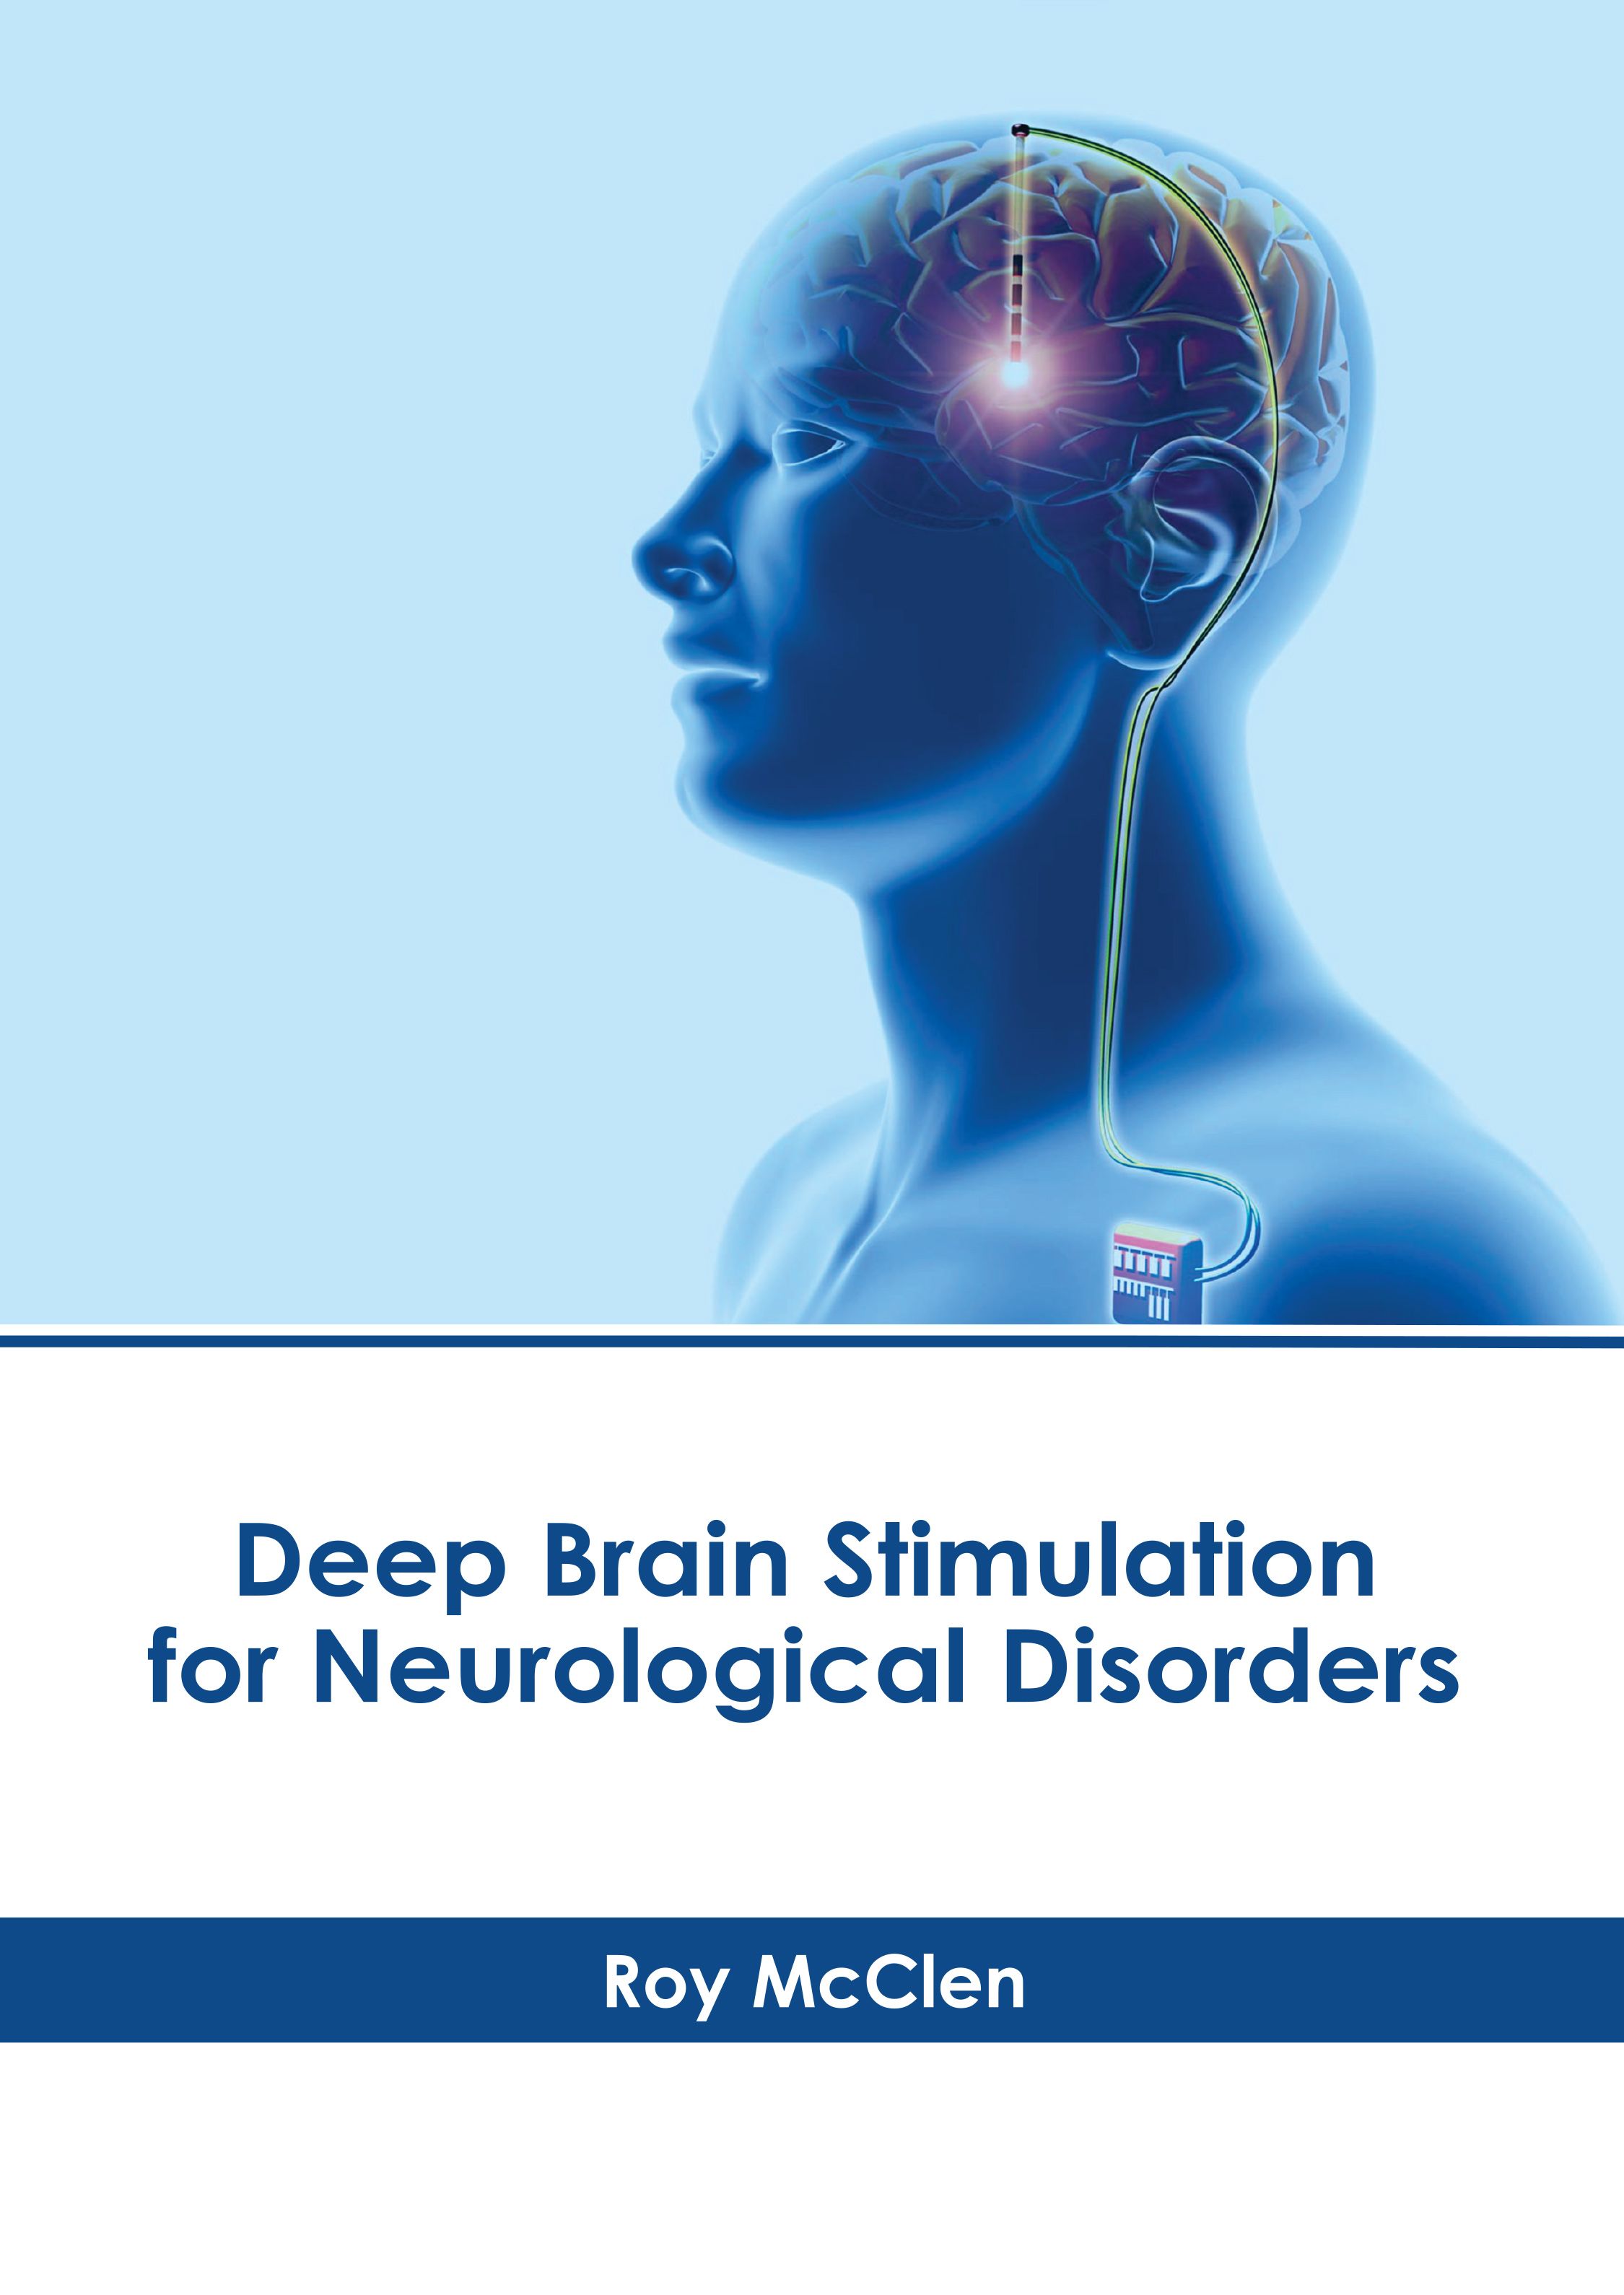 DEEP BRAIN STIMULATION FOR NEUROLOGICAL DISORDERS